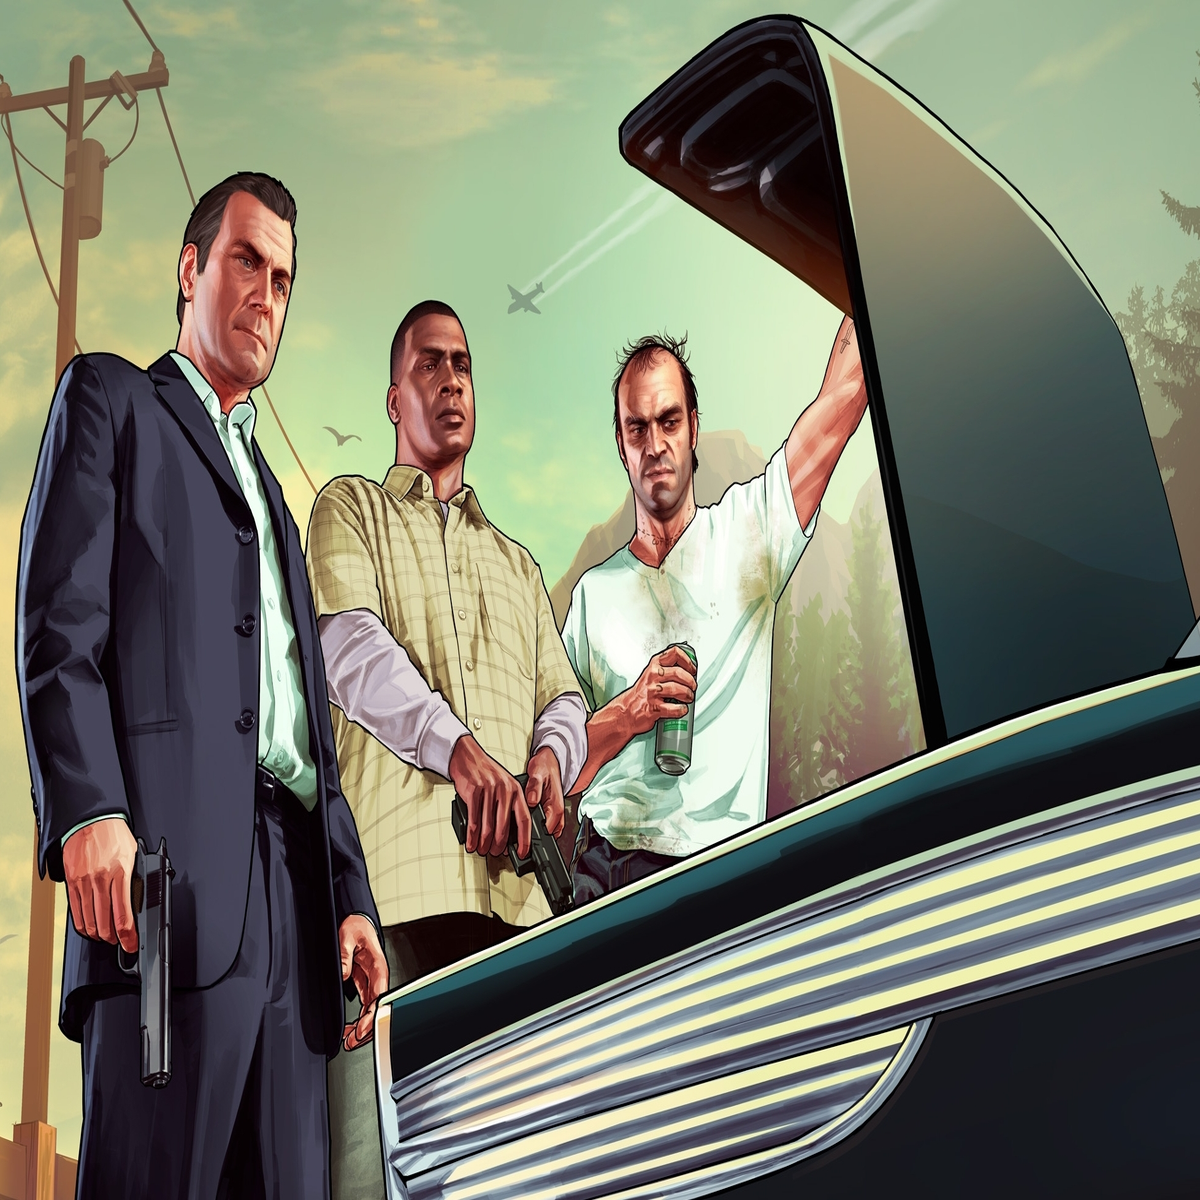 Grand Theft Auto IV (Game) - Giant Bomb